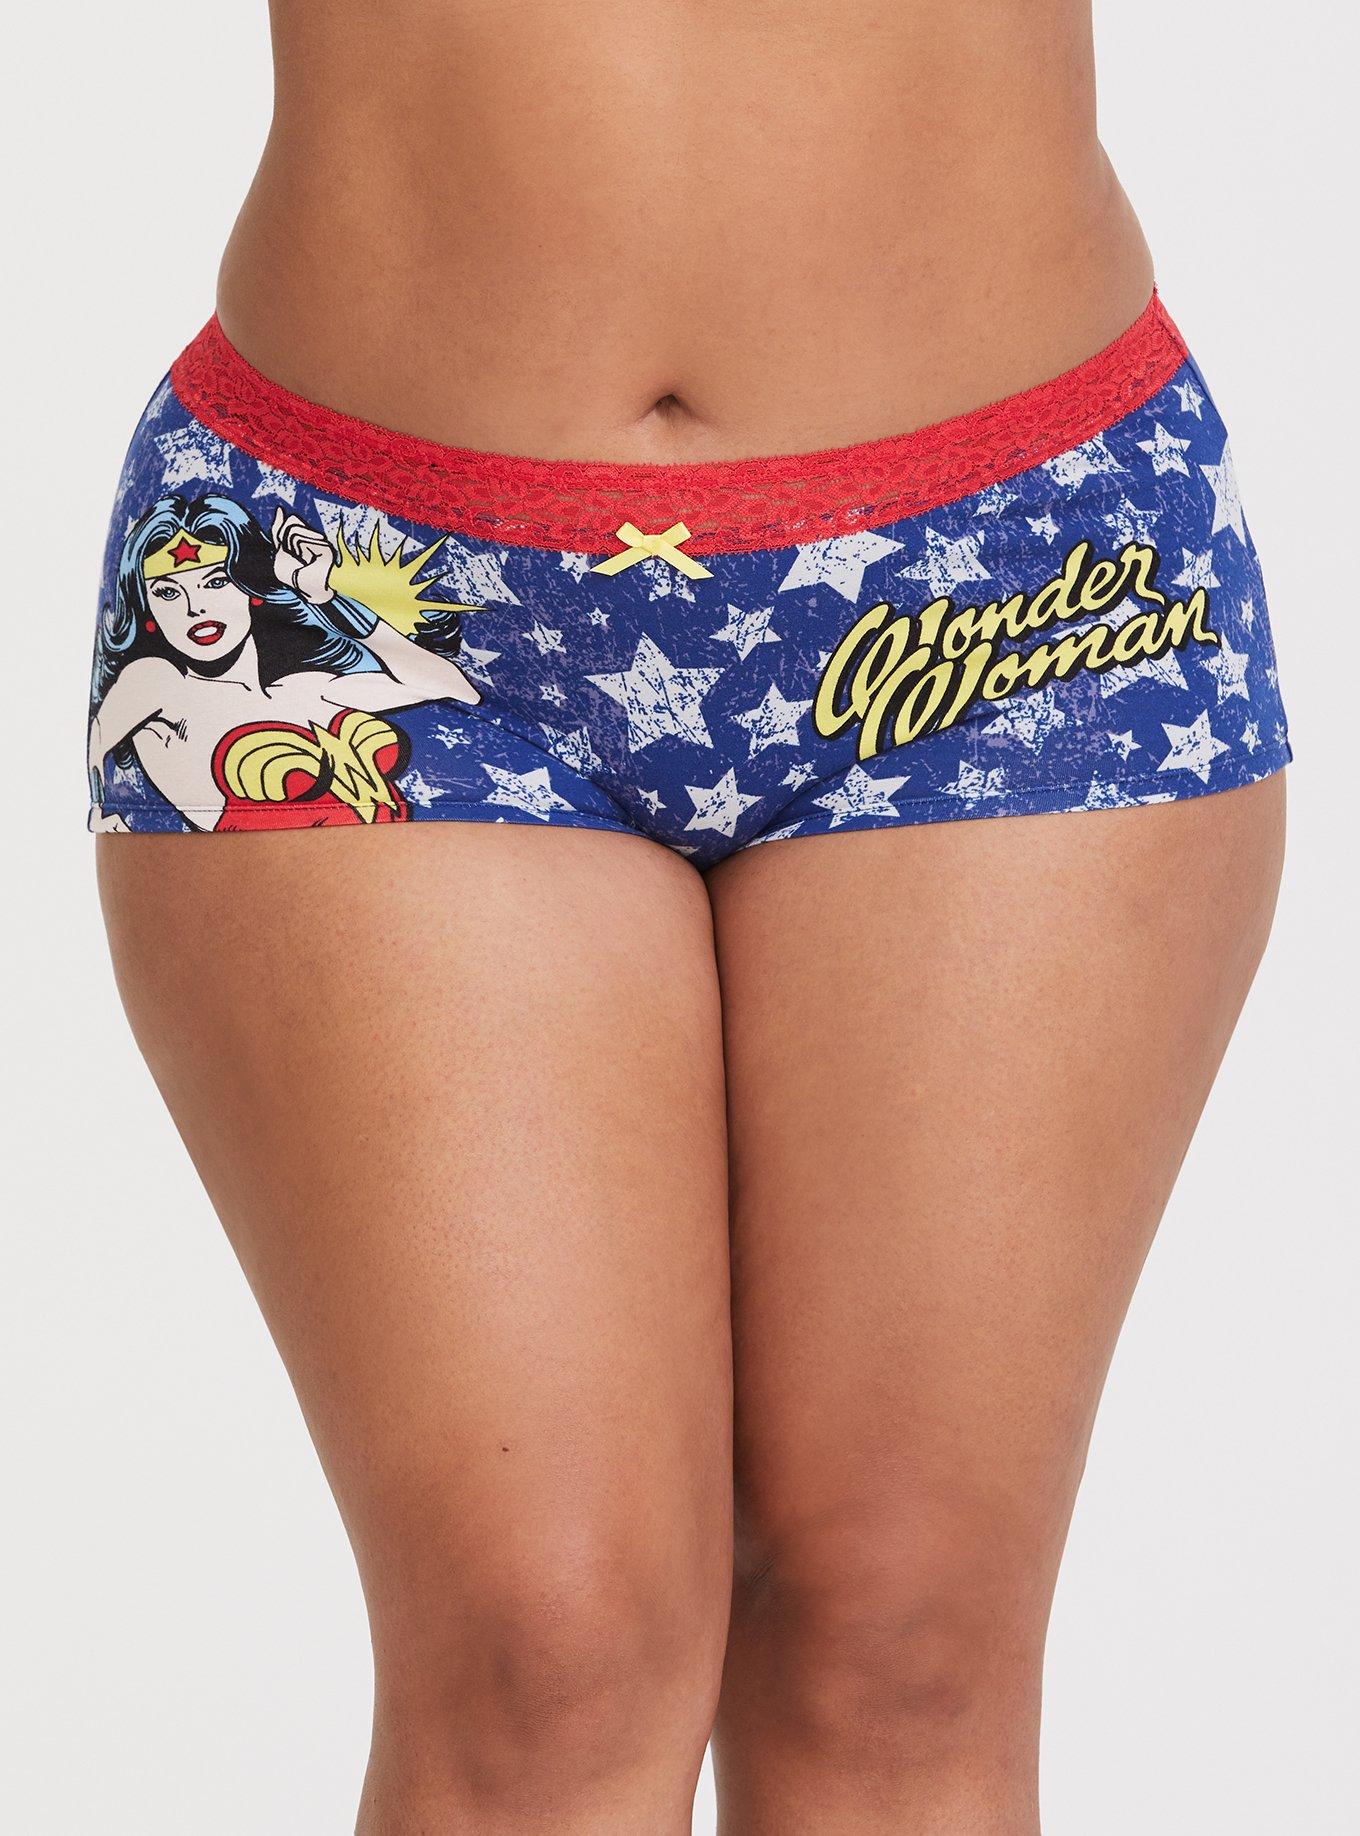 Plus Size - Wonder Woman Cotton Boyshort Panty - Torrid